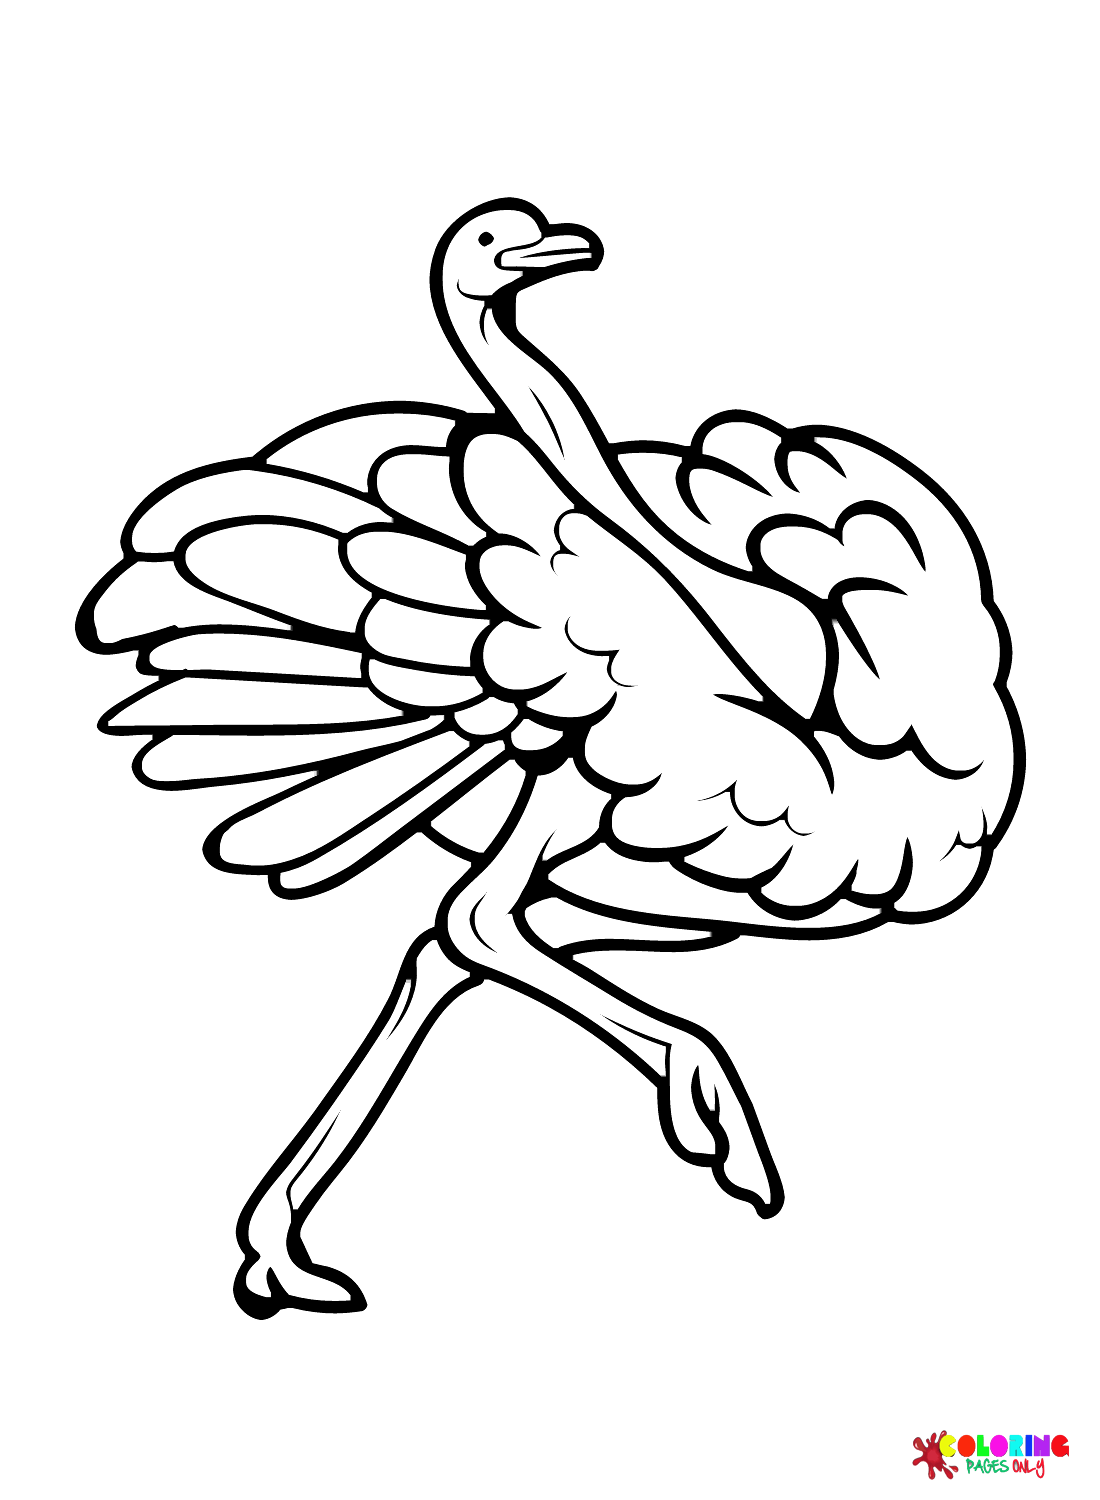 Avestruz simple de avestruz